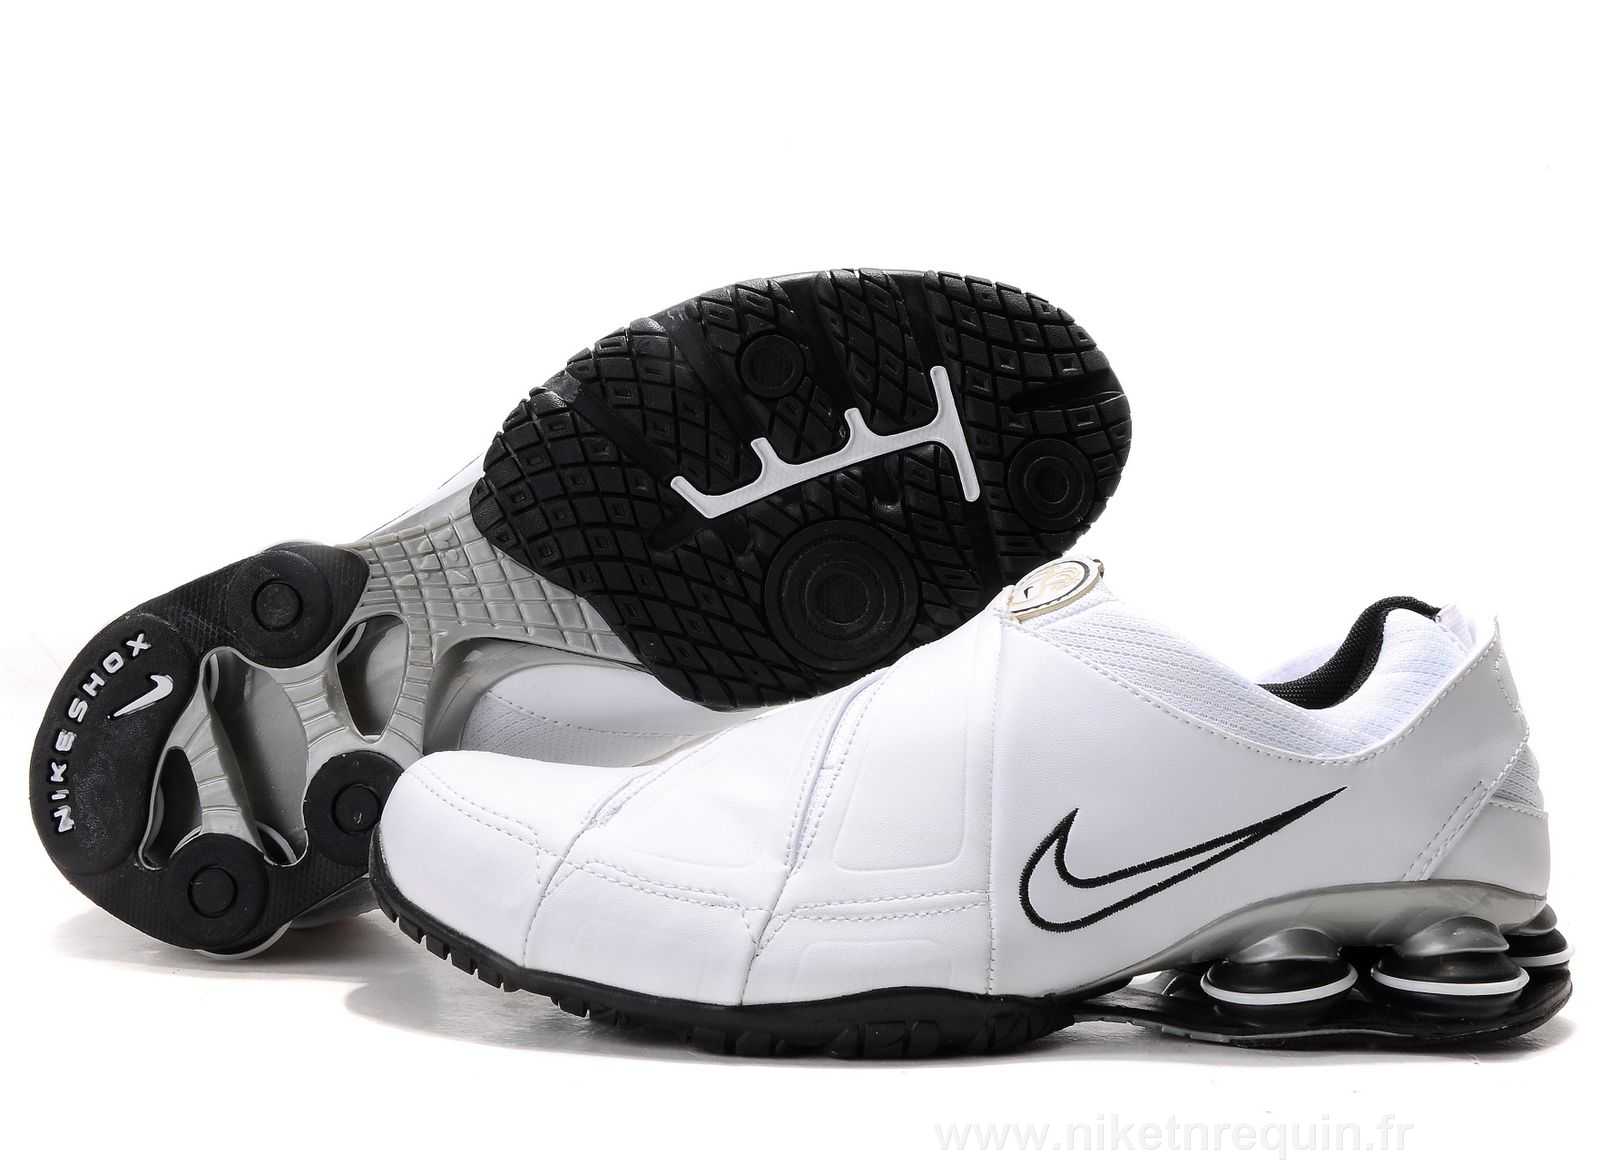 Noir Et Blanc Nike Shox R5 En Cuir 610